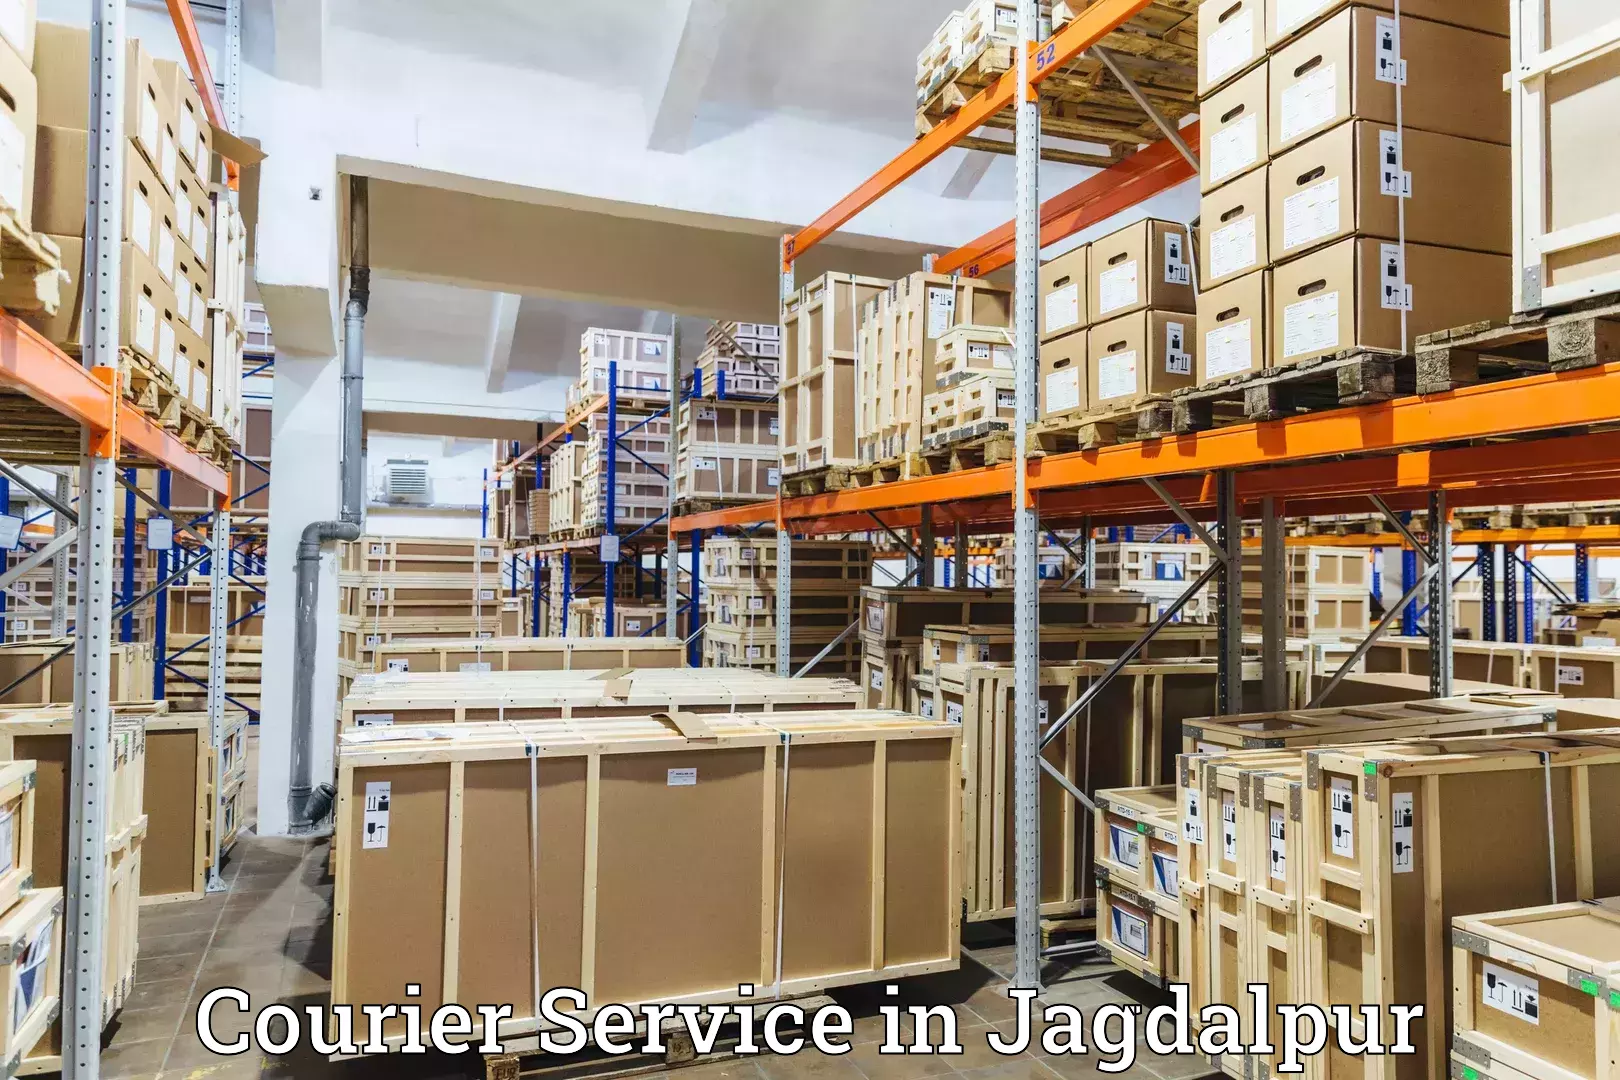 Doorstep delivery service in Jagdalpur